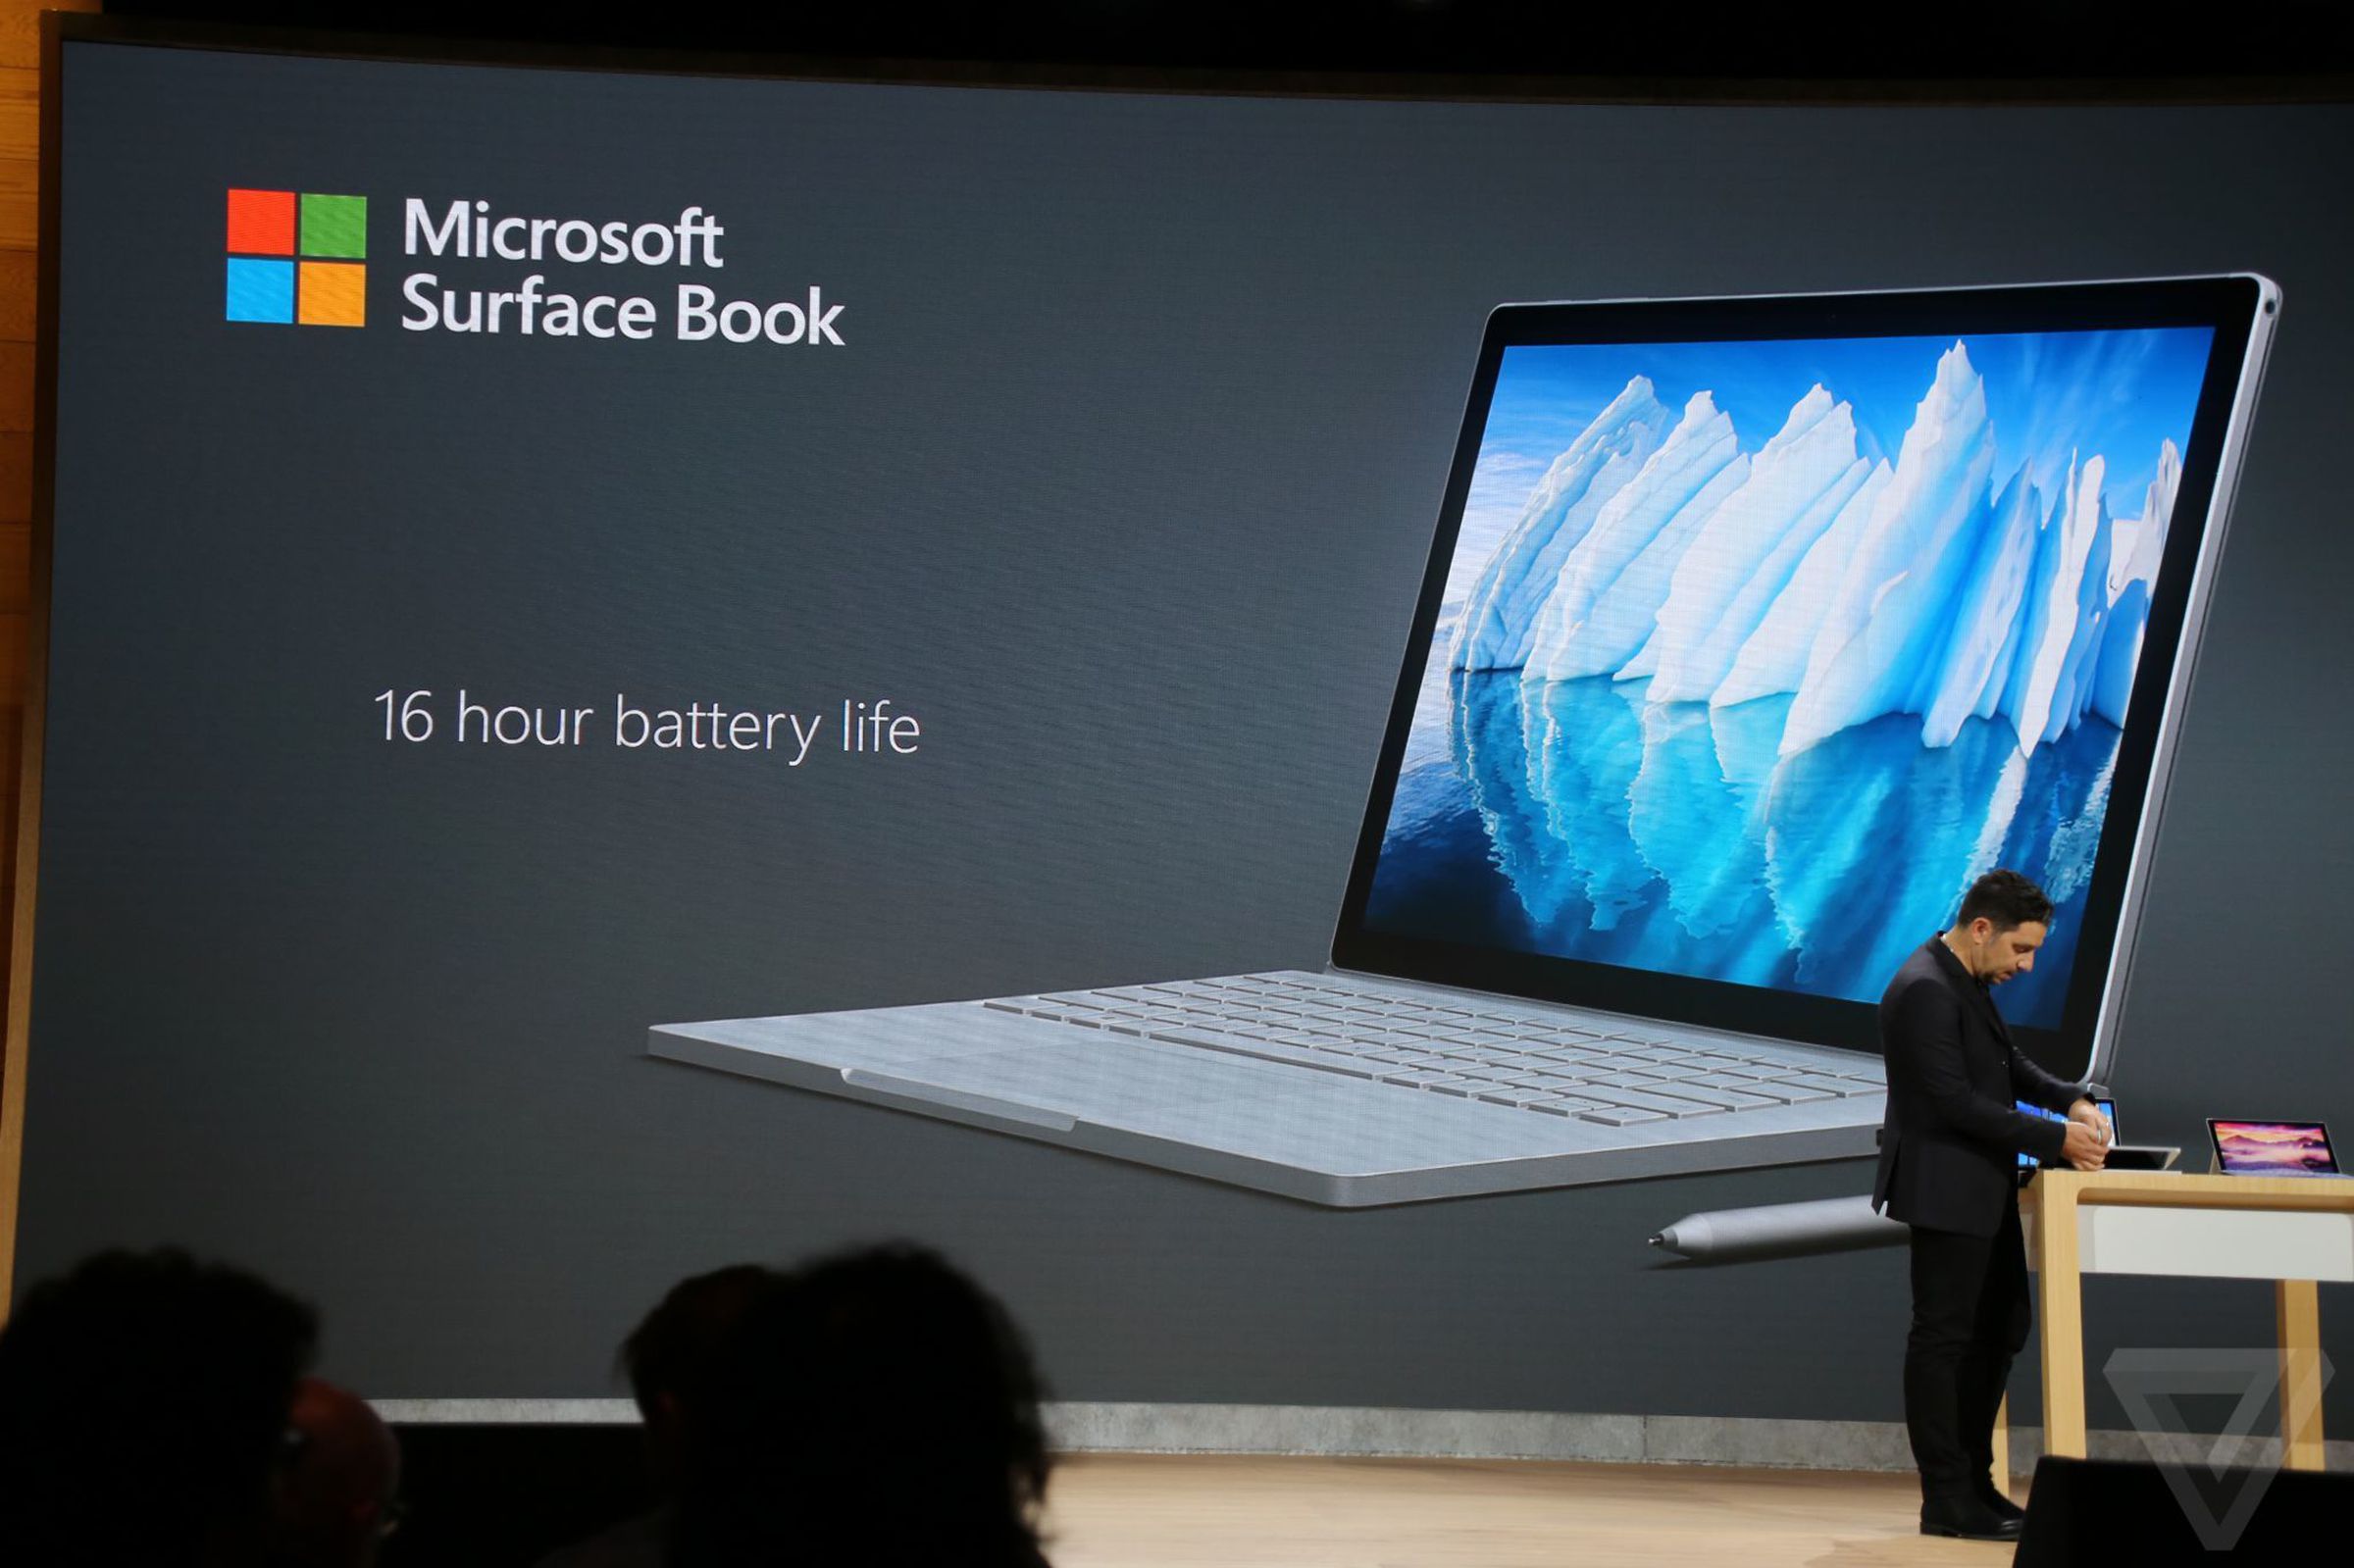 Microsoft Surface Book i7 announcement photos